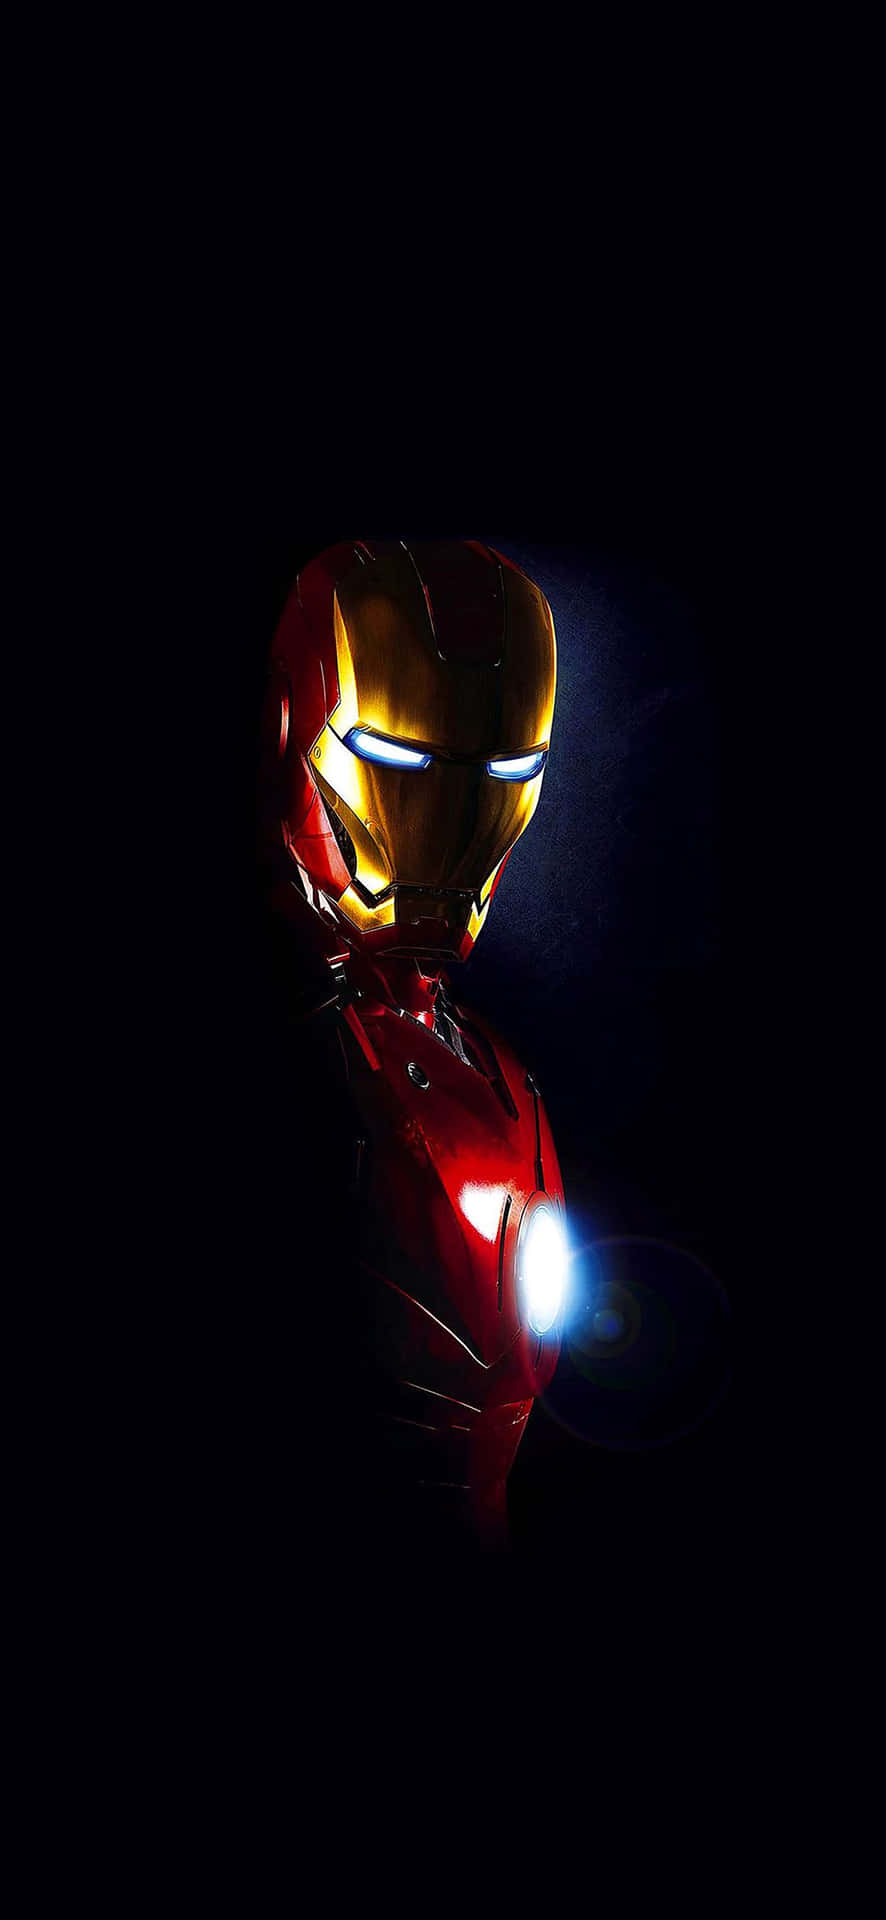 Descubreel Poder De Iron Man En El Iphone X. Fondo de pantalla